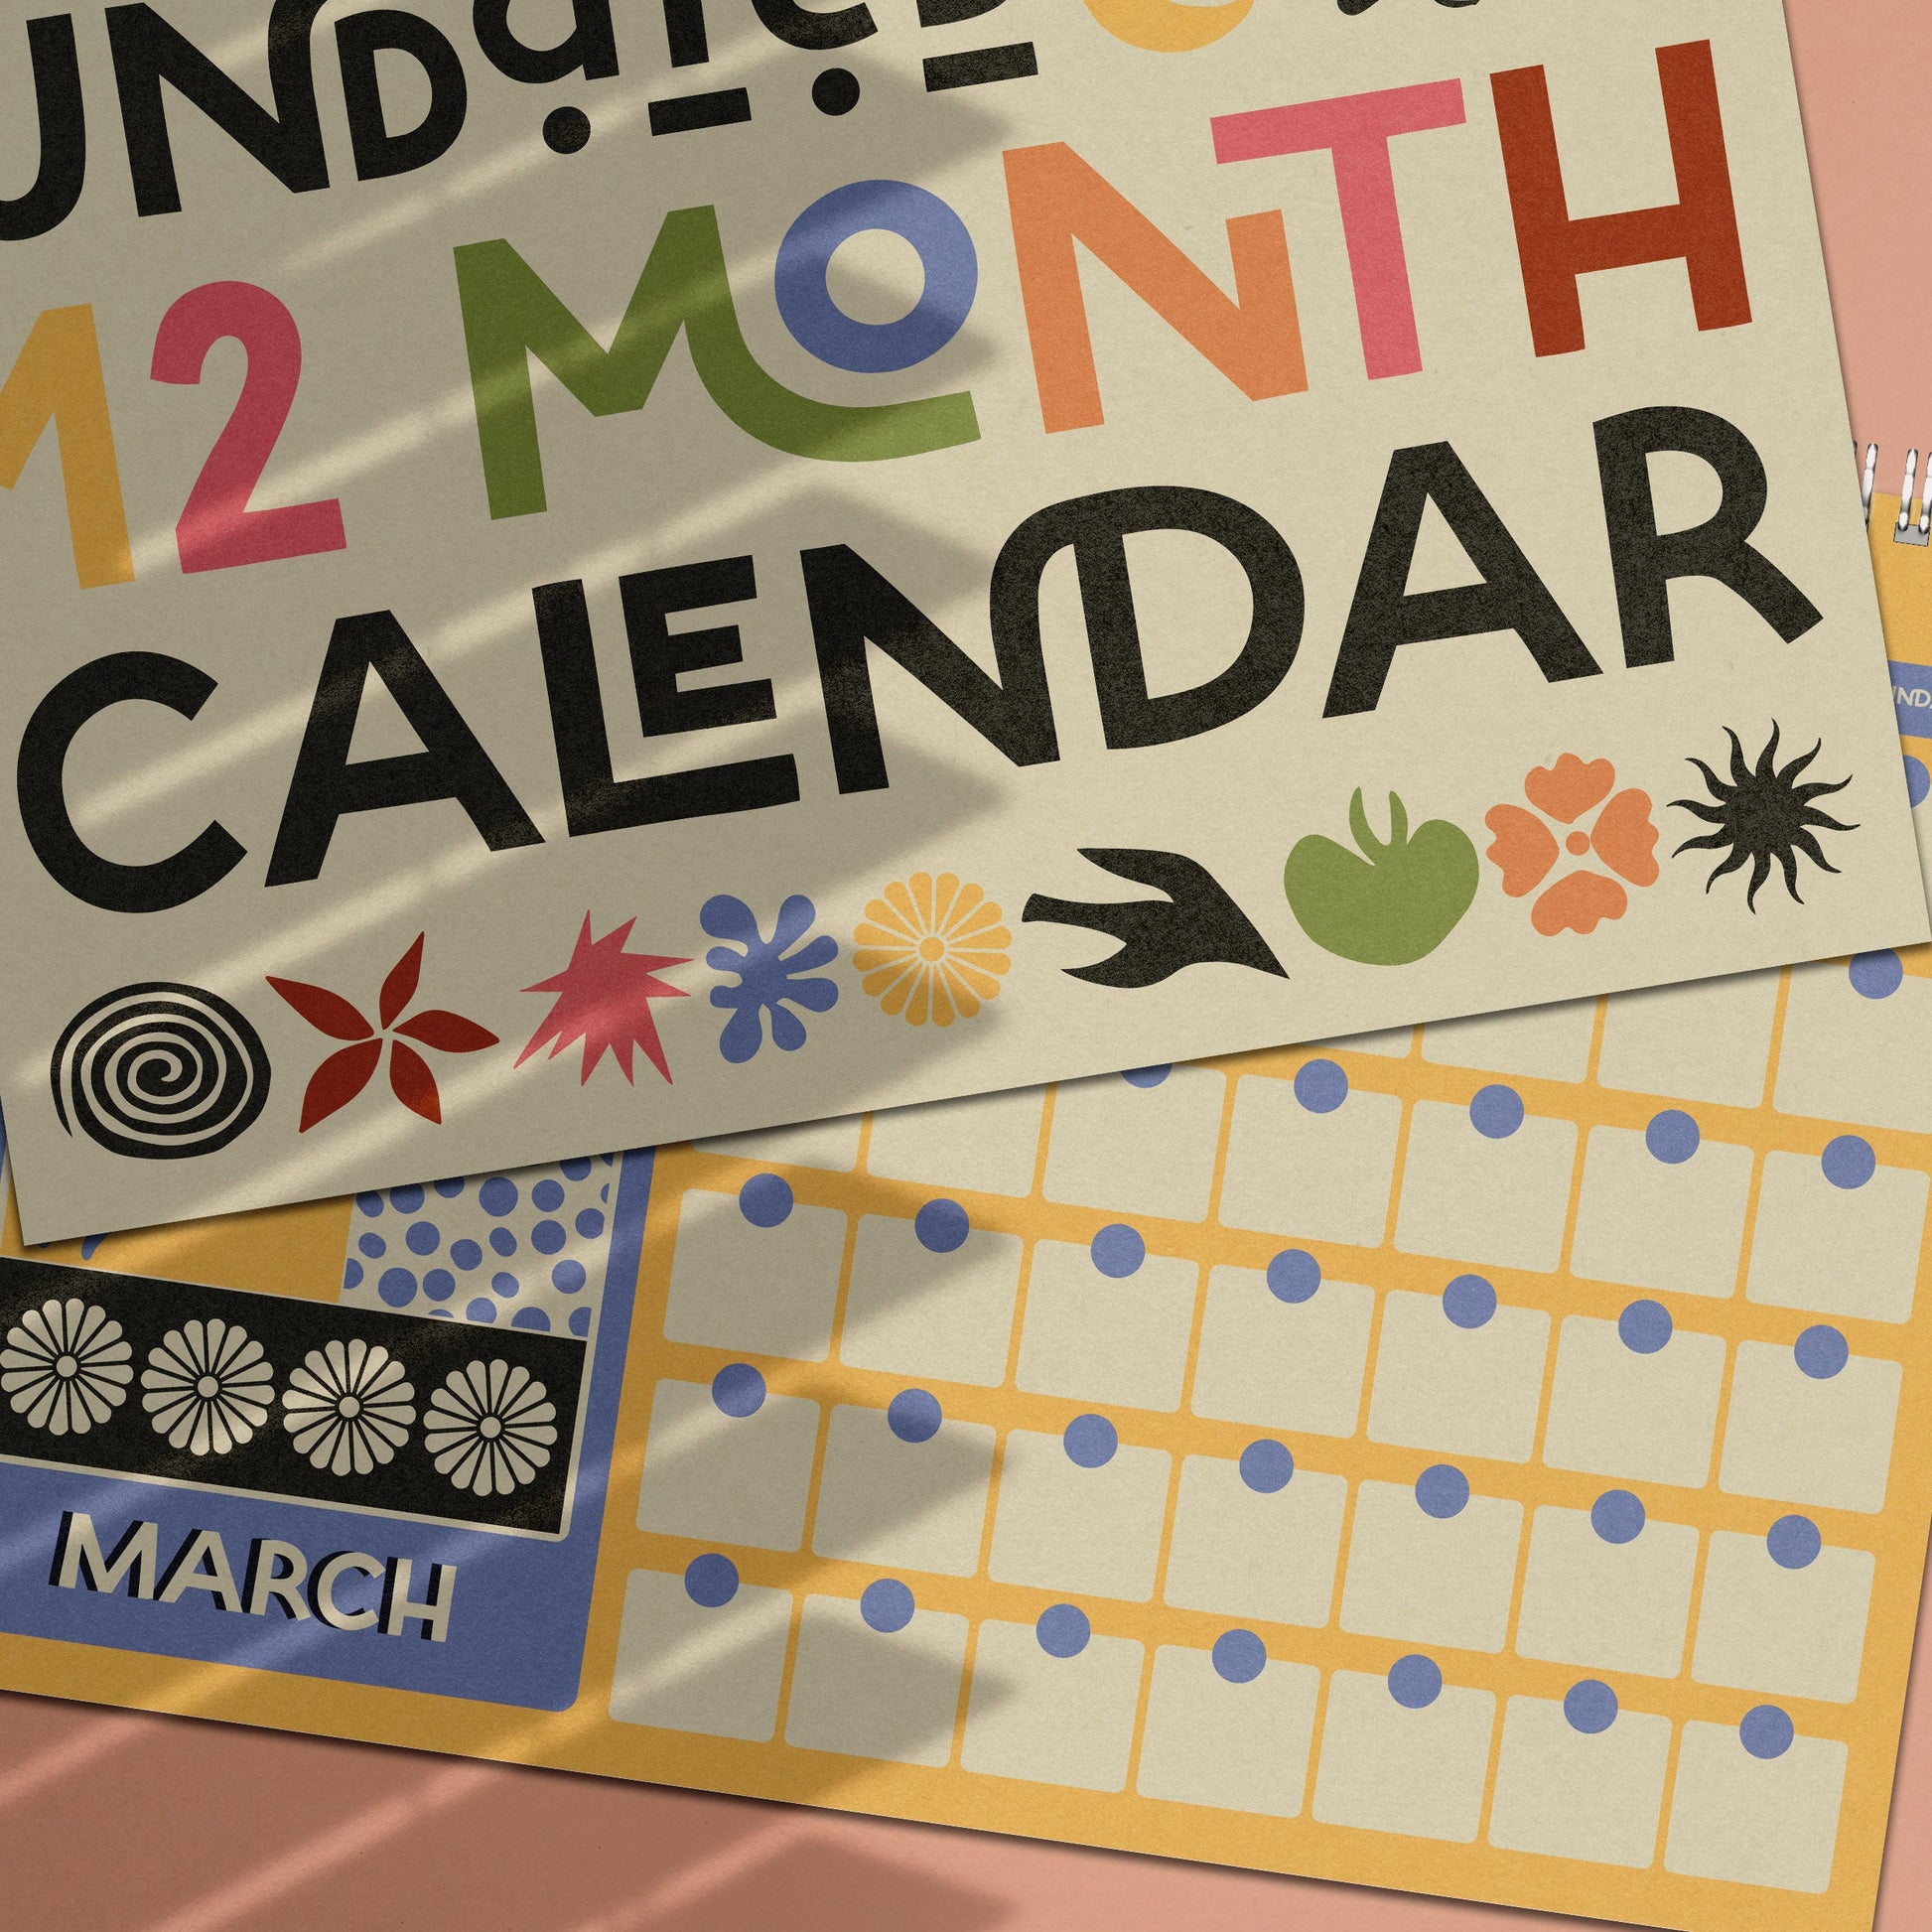 Undated Monthly Calendar | Wall Planner | Matisse Inspired | A4 Landscape | 12 month wirebound hanging calendar-2